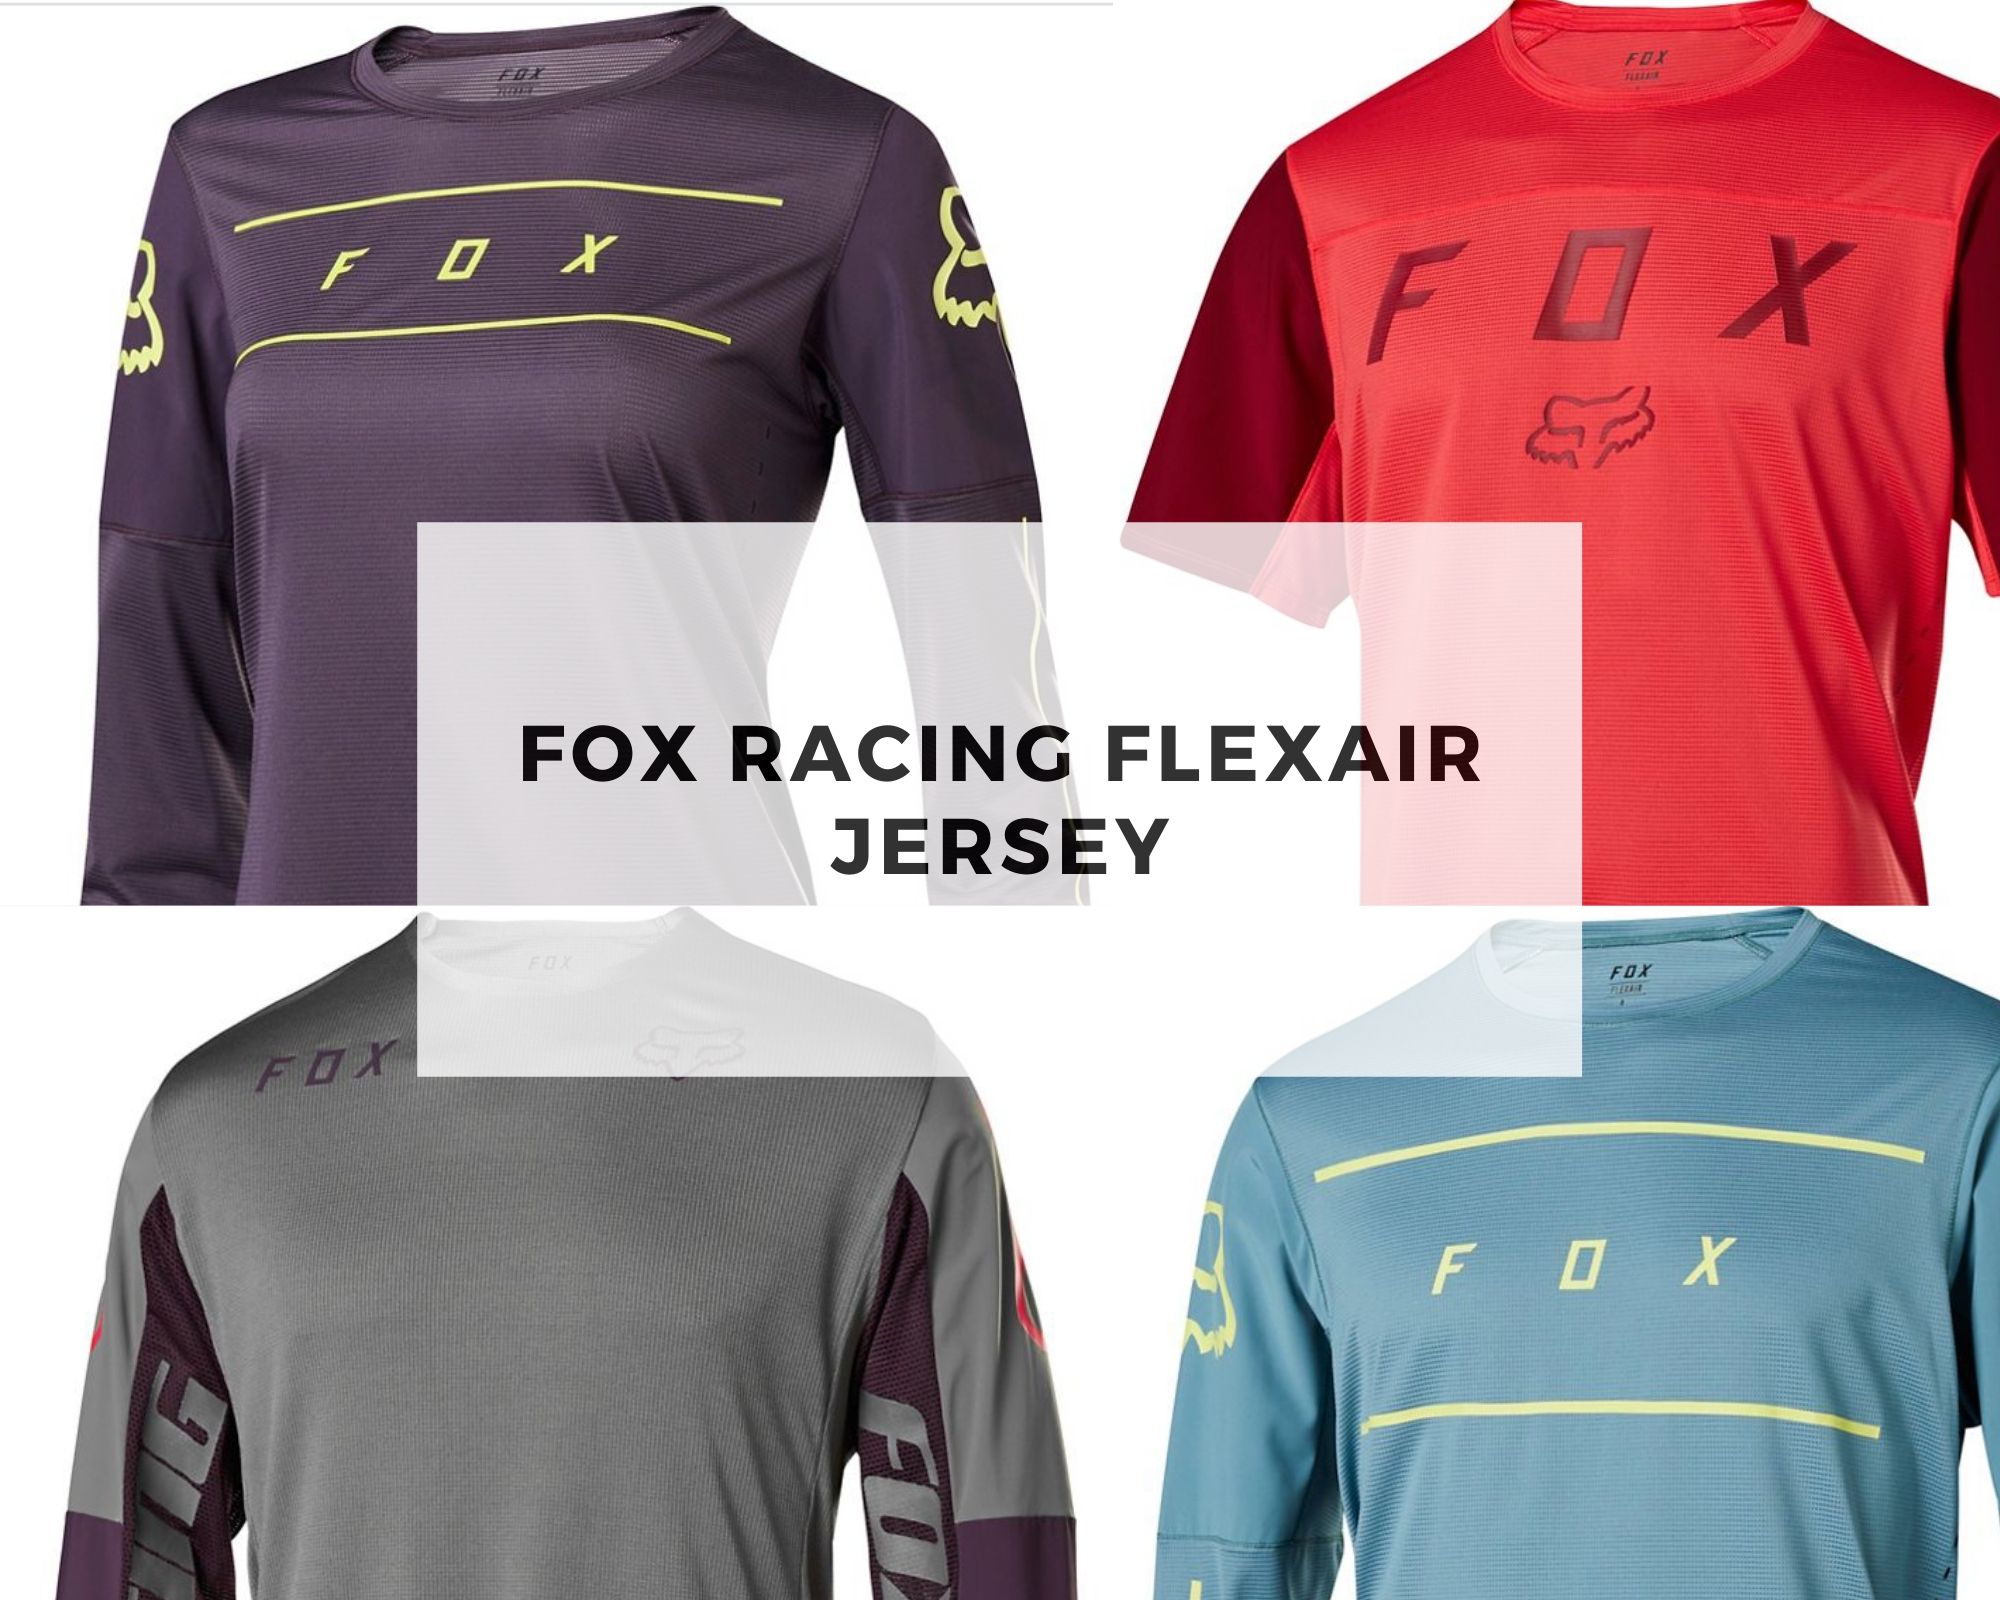 Fox racing jersey - flexair